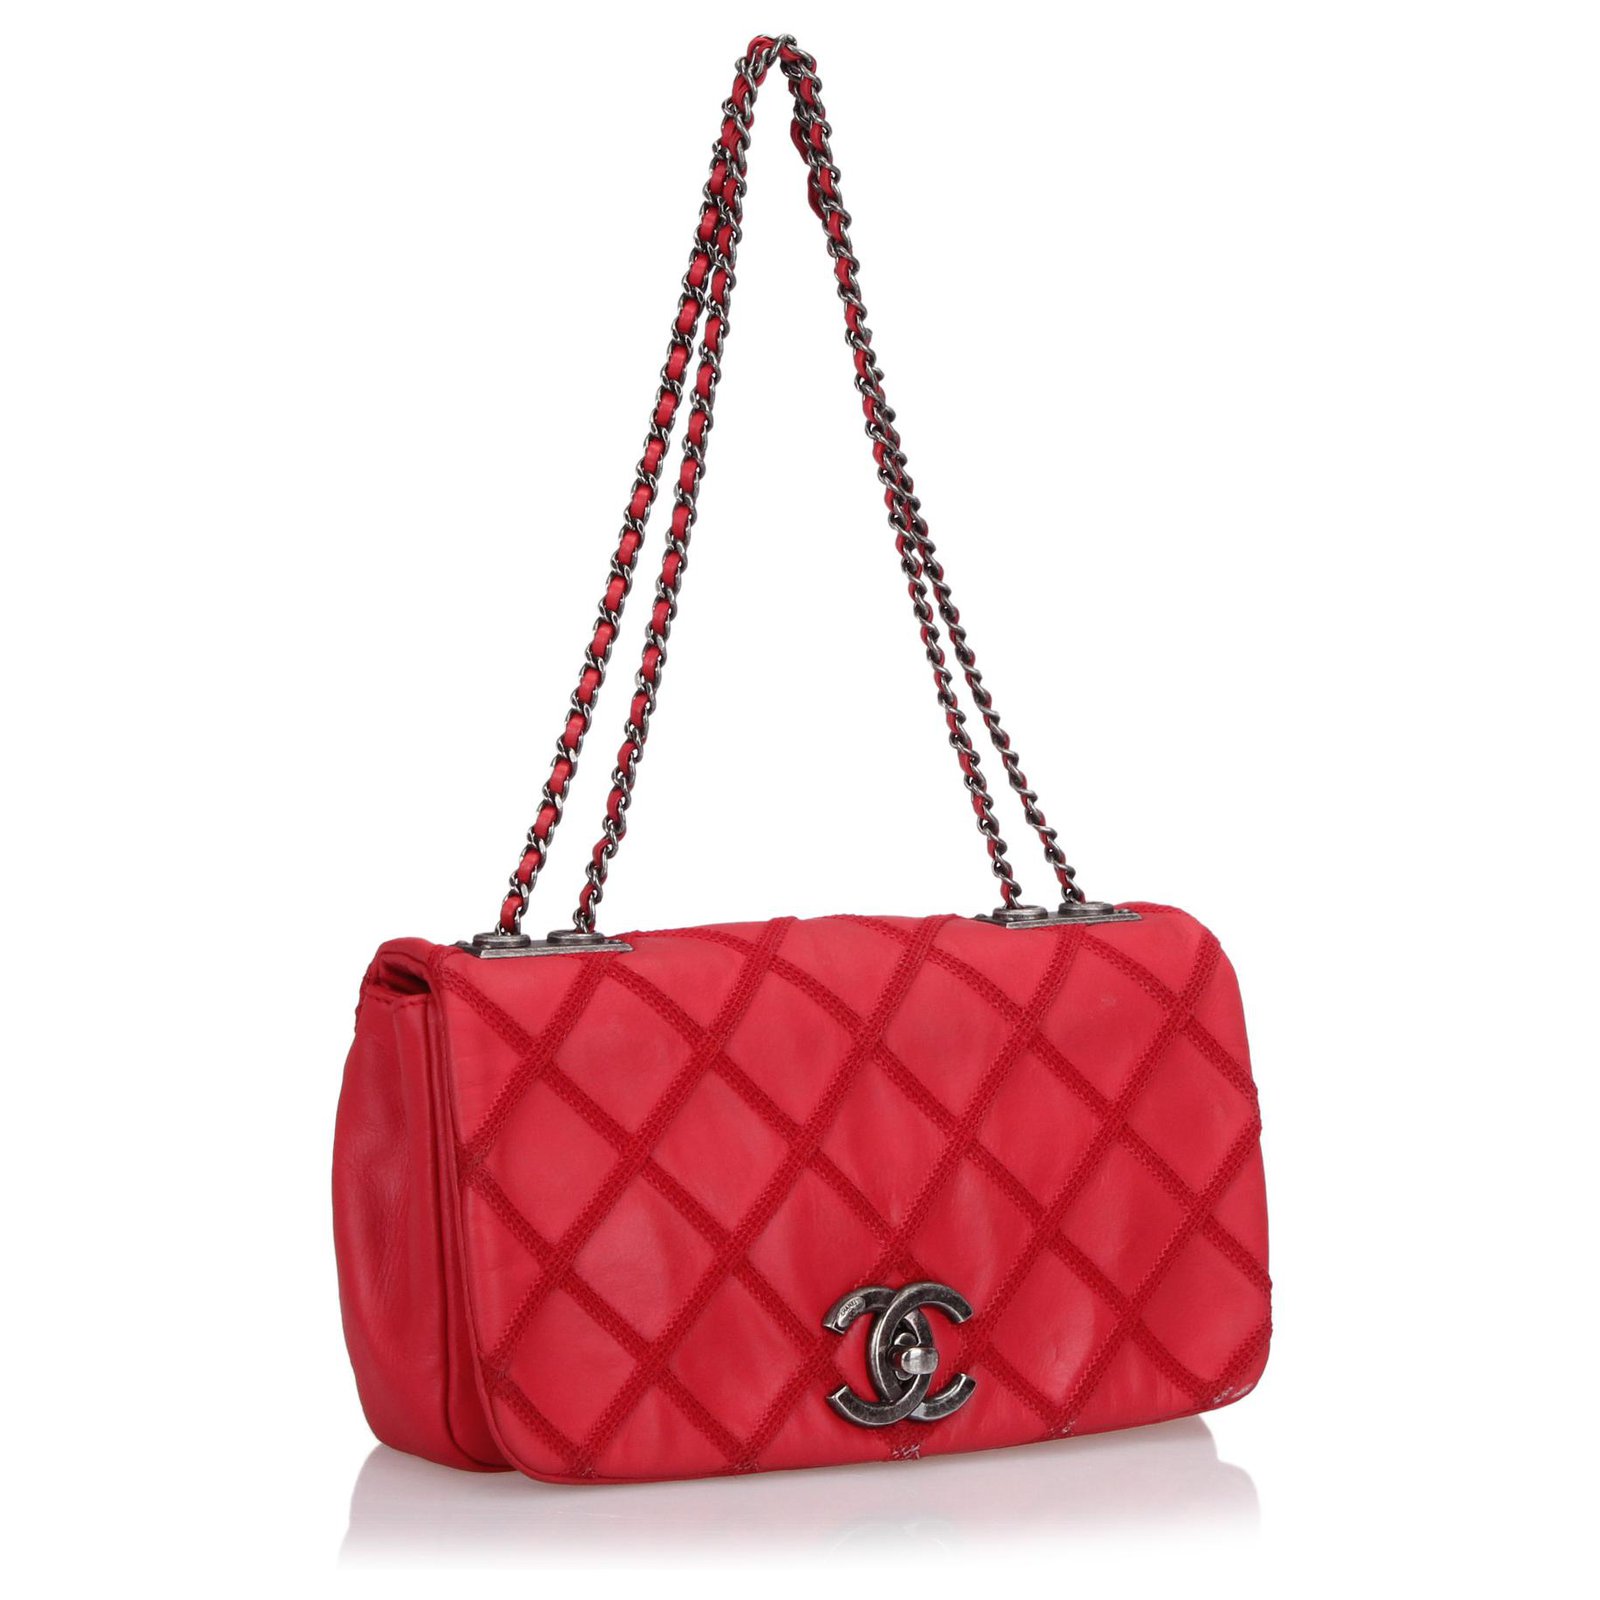 Chanel Pink Small Diamond Stitch Leather Flap Bag Pony-style